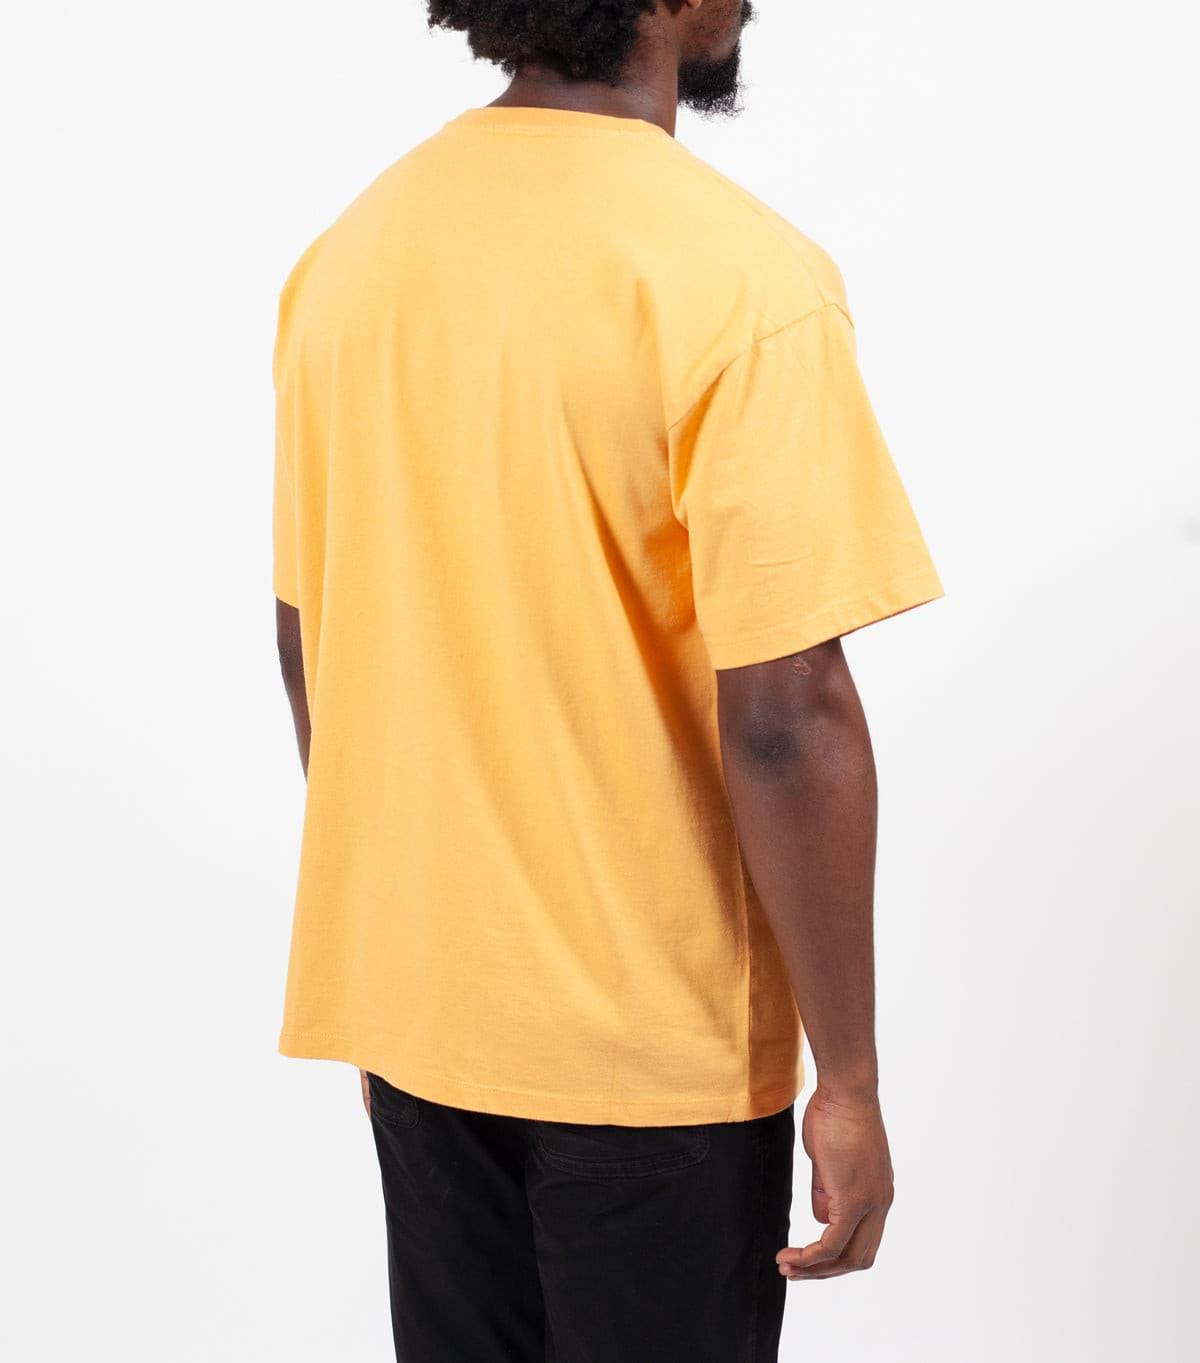 Rassvet Paccbet Logo T-Shirt Orange | SOMEWHERE